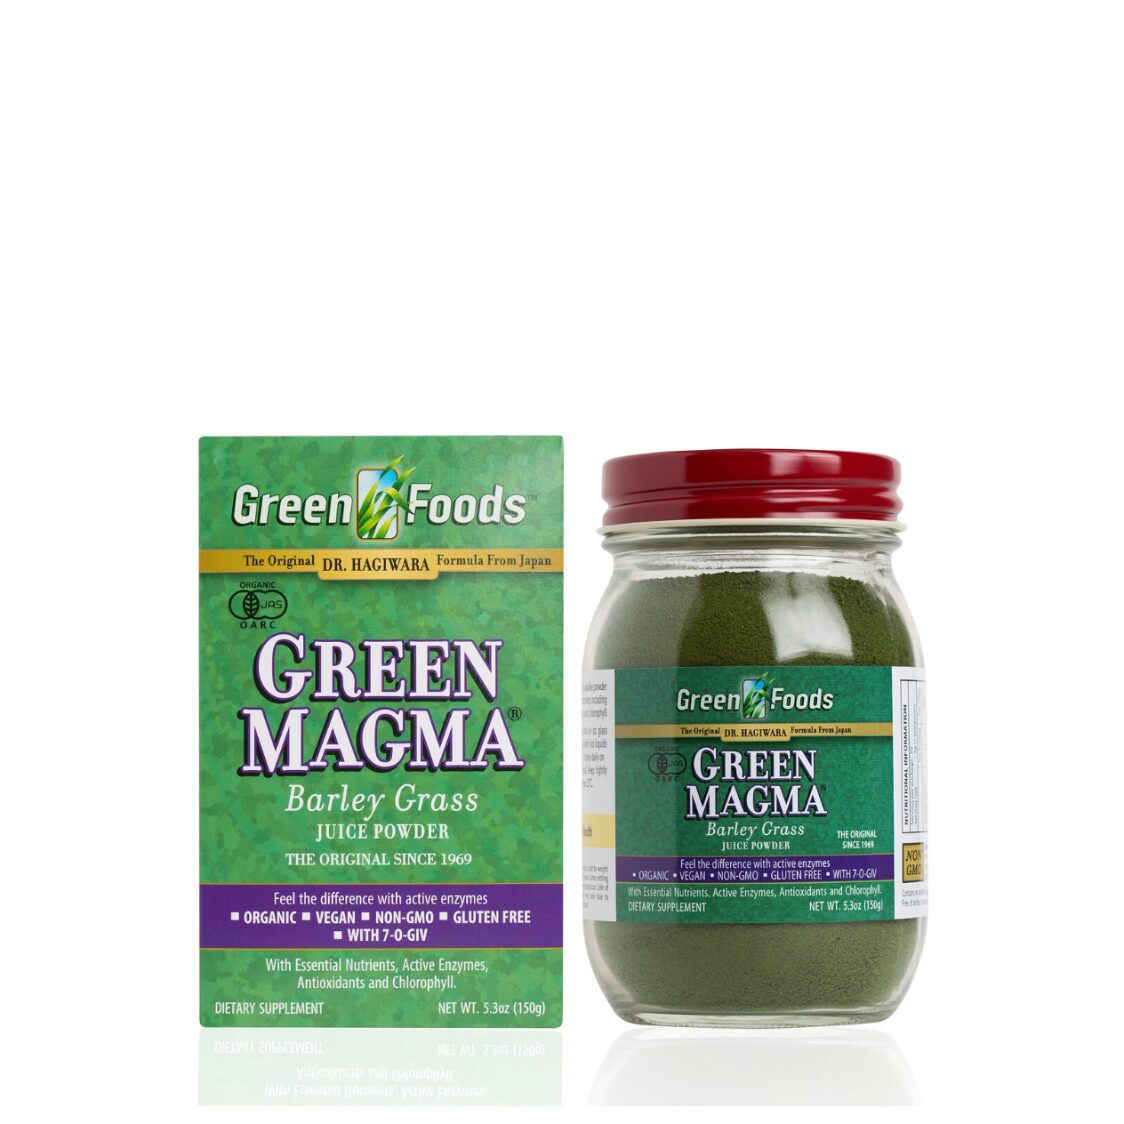 Kordels Green Foods Green Magma Barley Grass Juice Powder 150g